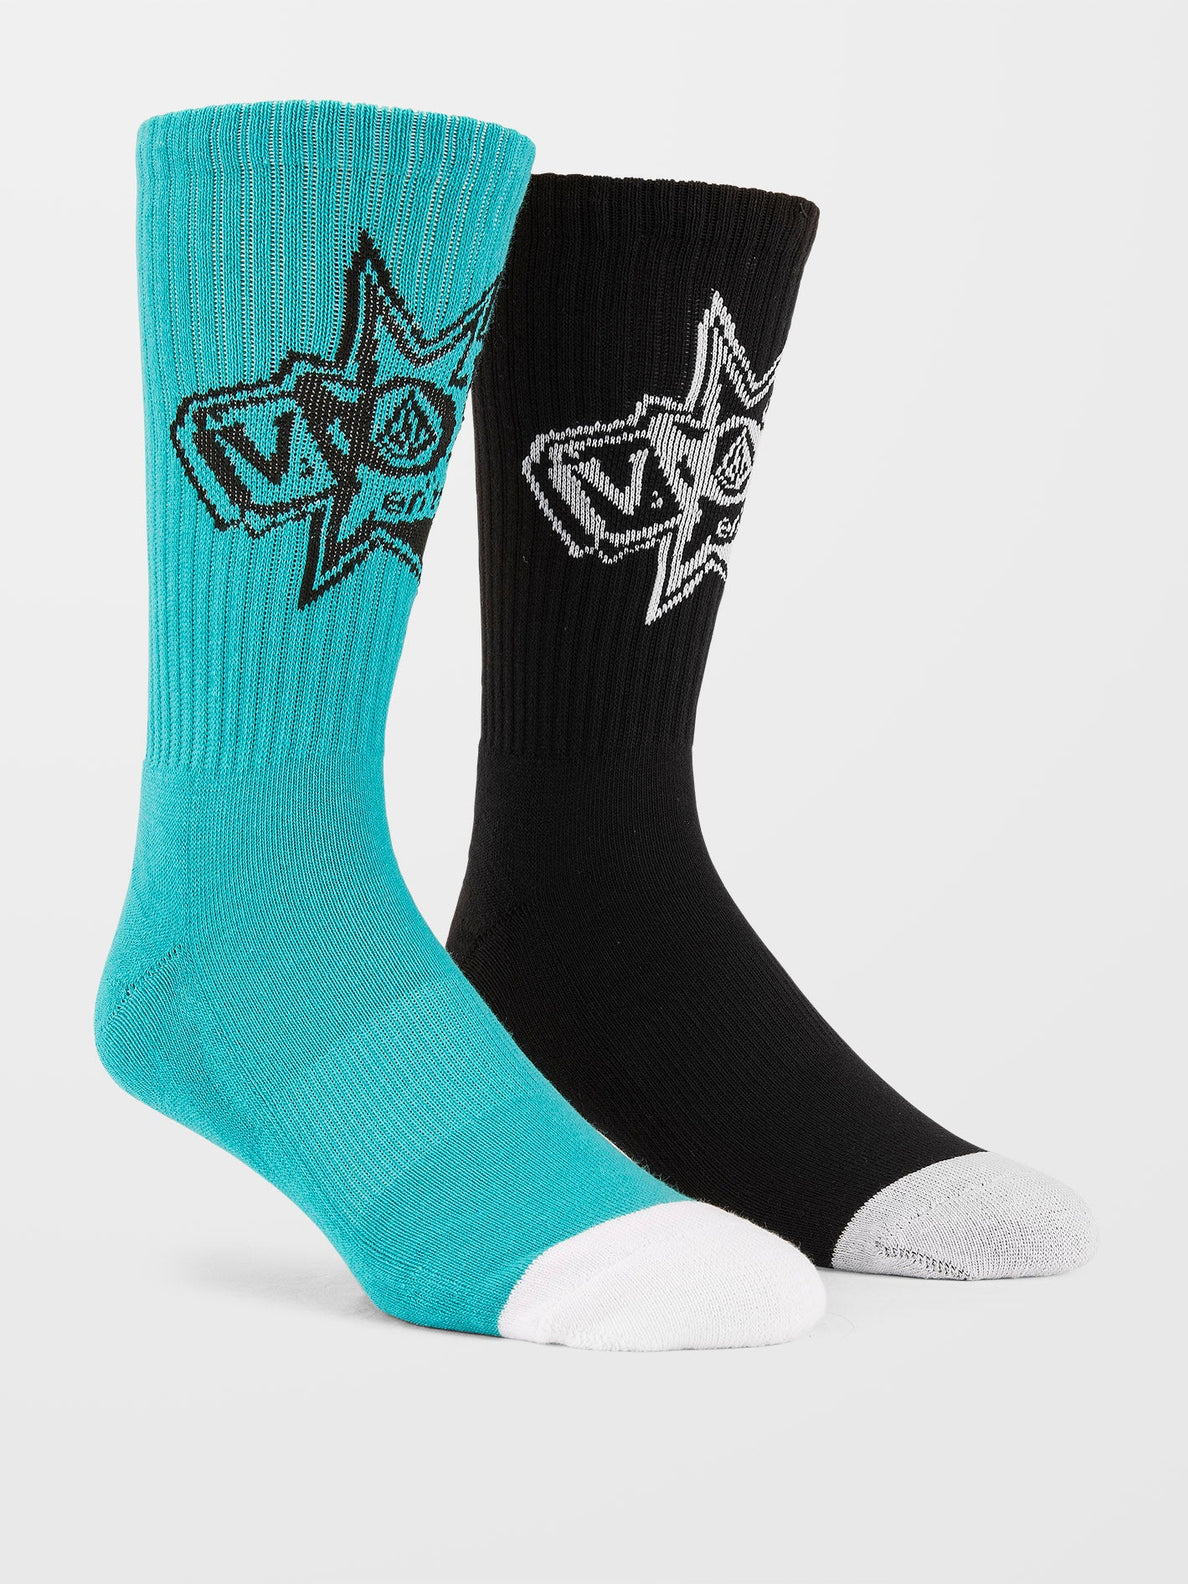 Volcom V Ent Sock Premium Temple Teal | Meistverkaufte Produkte | Neue Produkte | Neueste Produkte | Sammlung_Zalando | Socken | Volcom-Shop | surfdevils.com